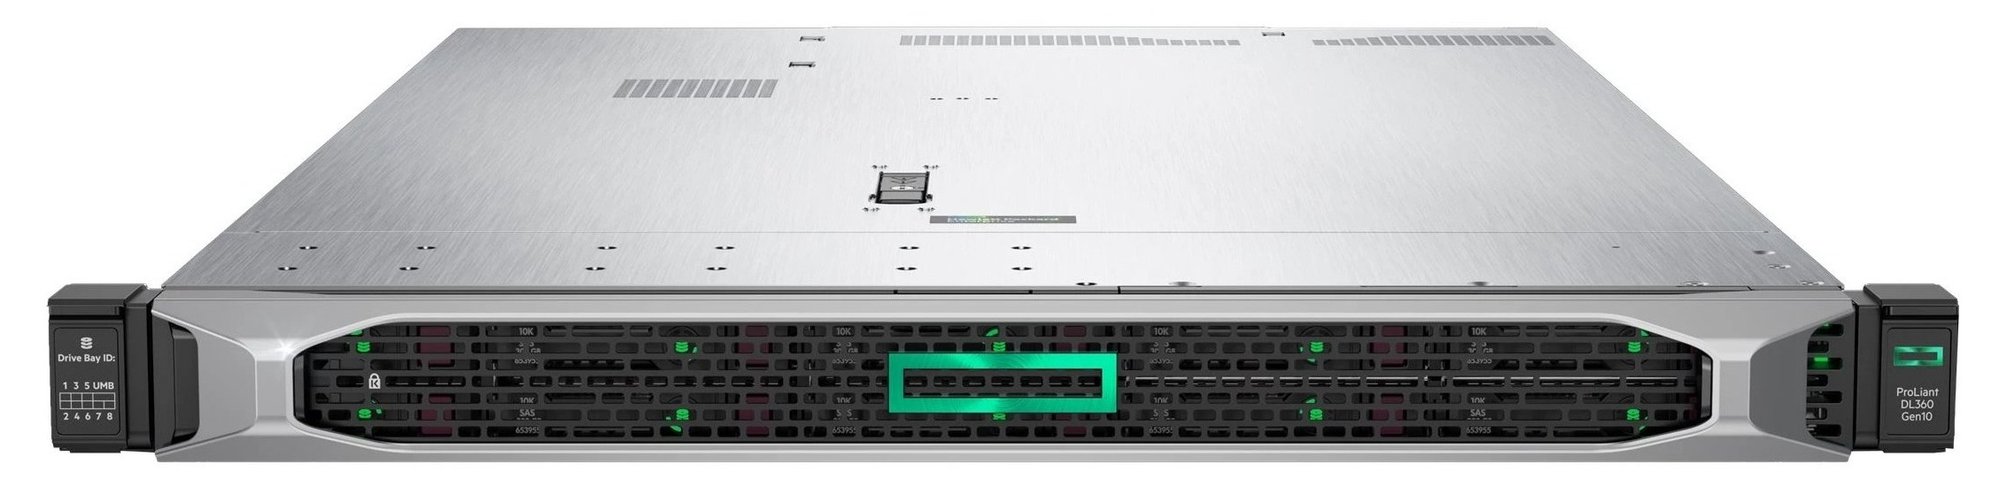 P40638-B21 | HPE Proliant Dl360 Gen10 Server - NEW